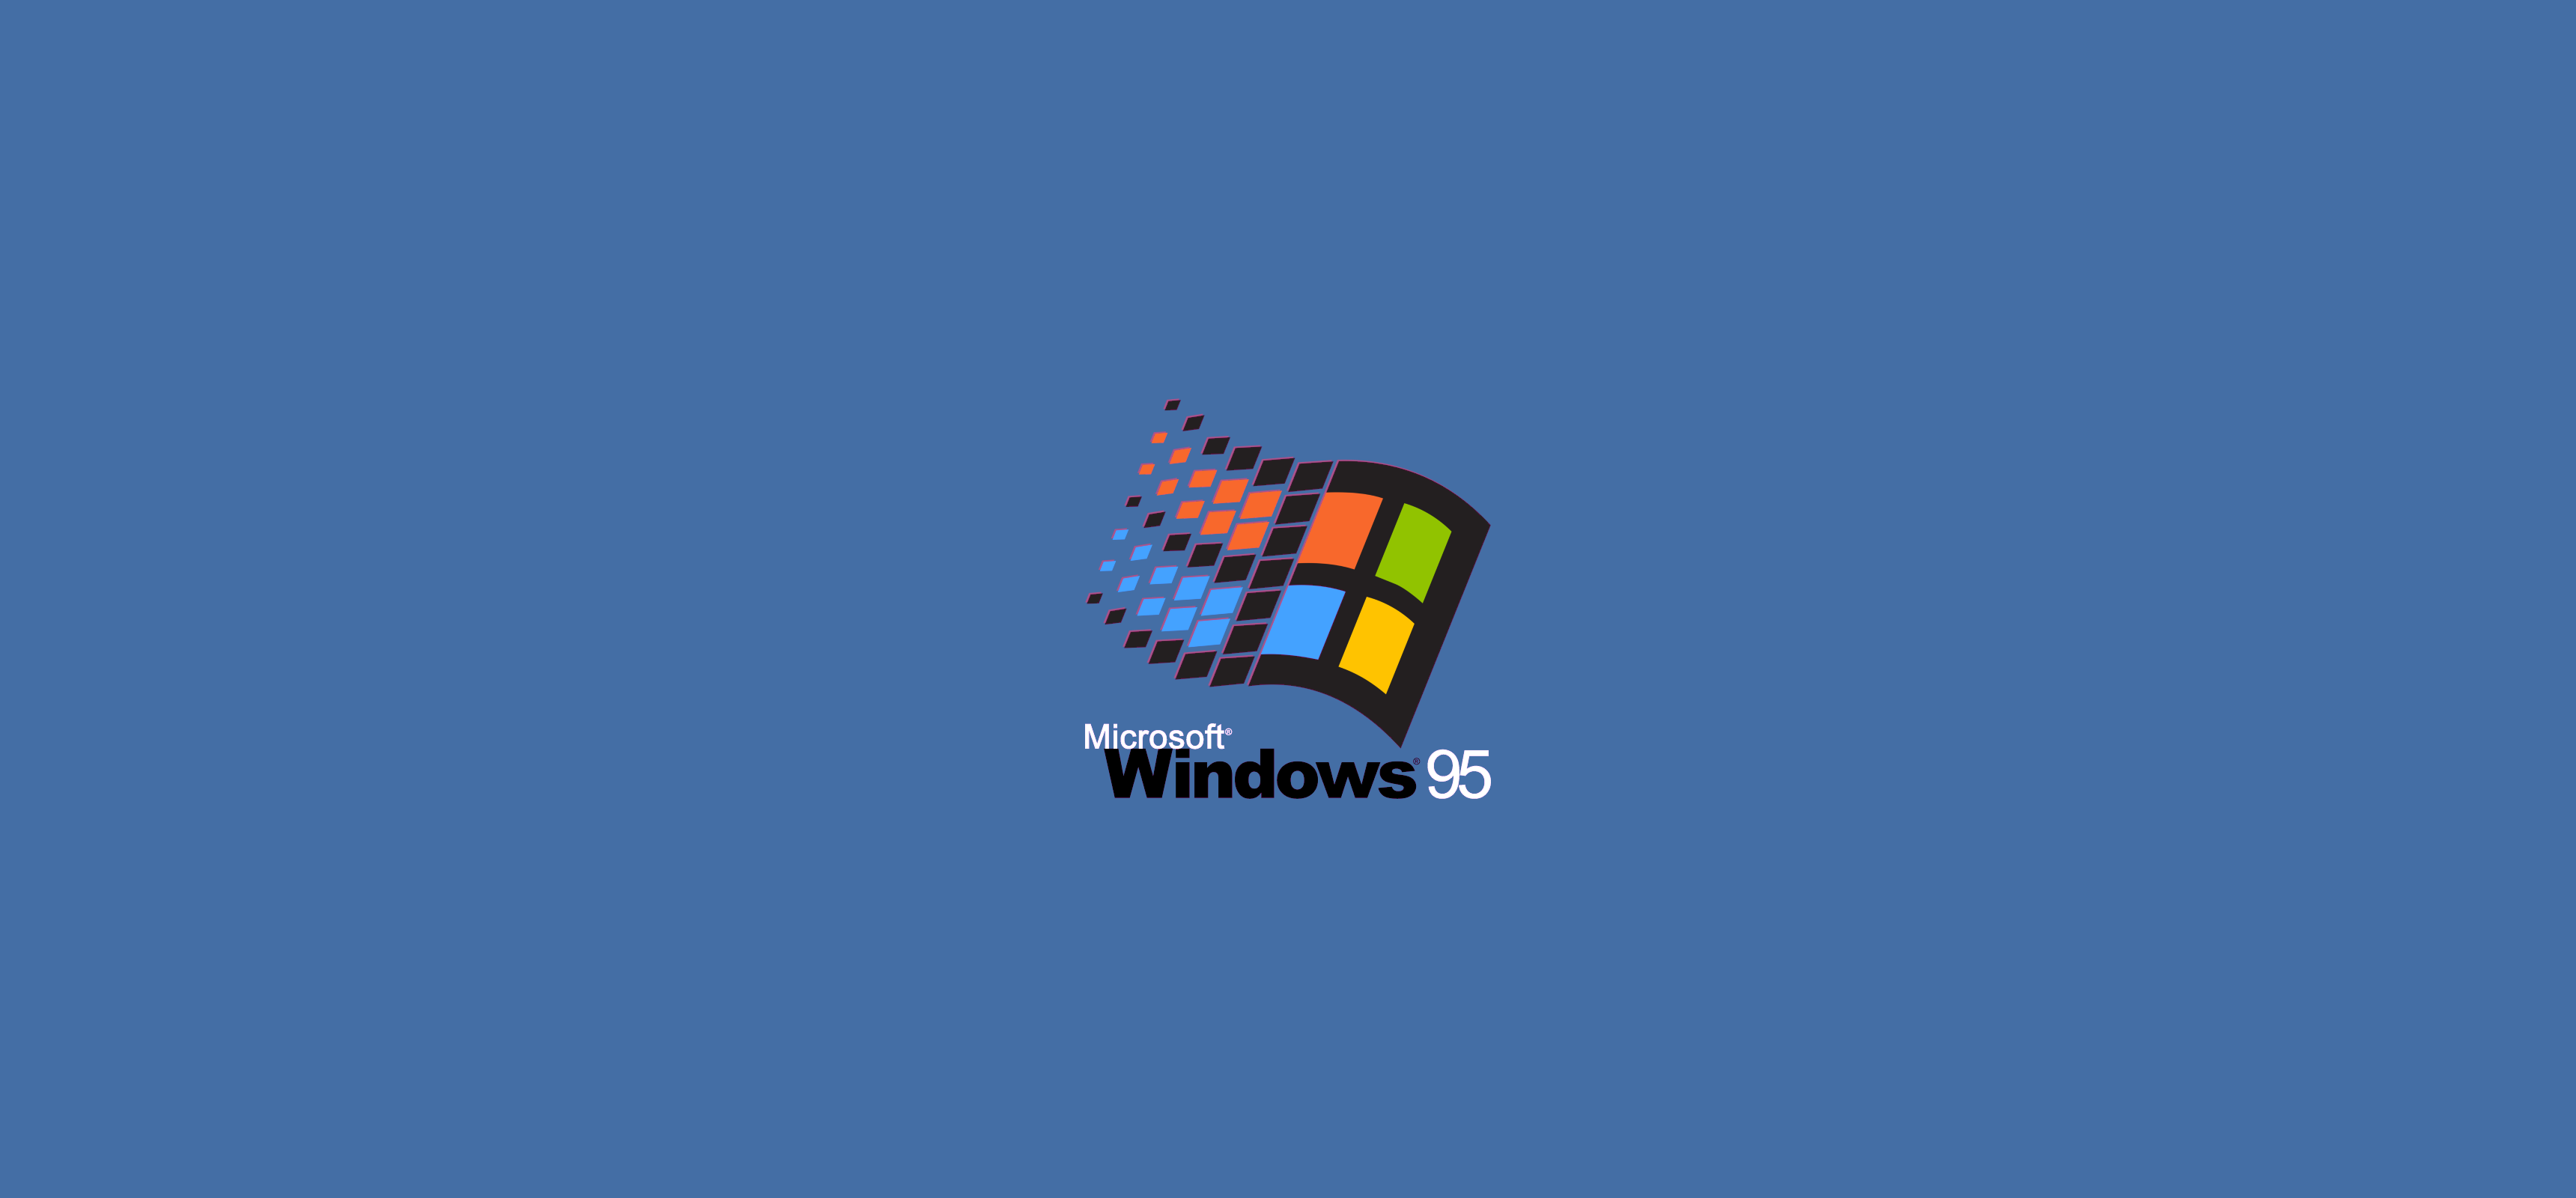 Windows 95 Microsoft Logo Vintage Simple Background Blue Background 3440x1600